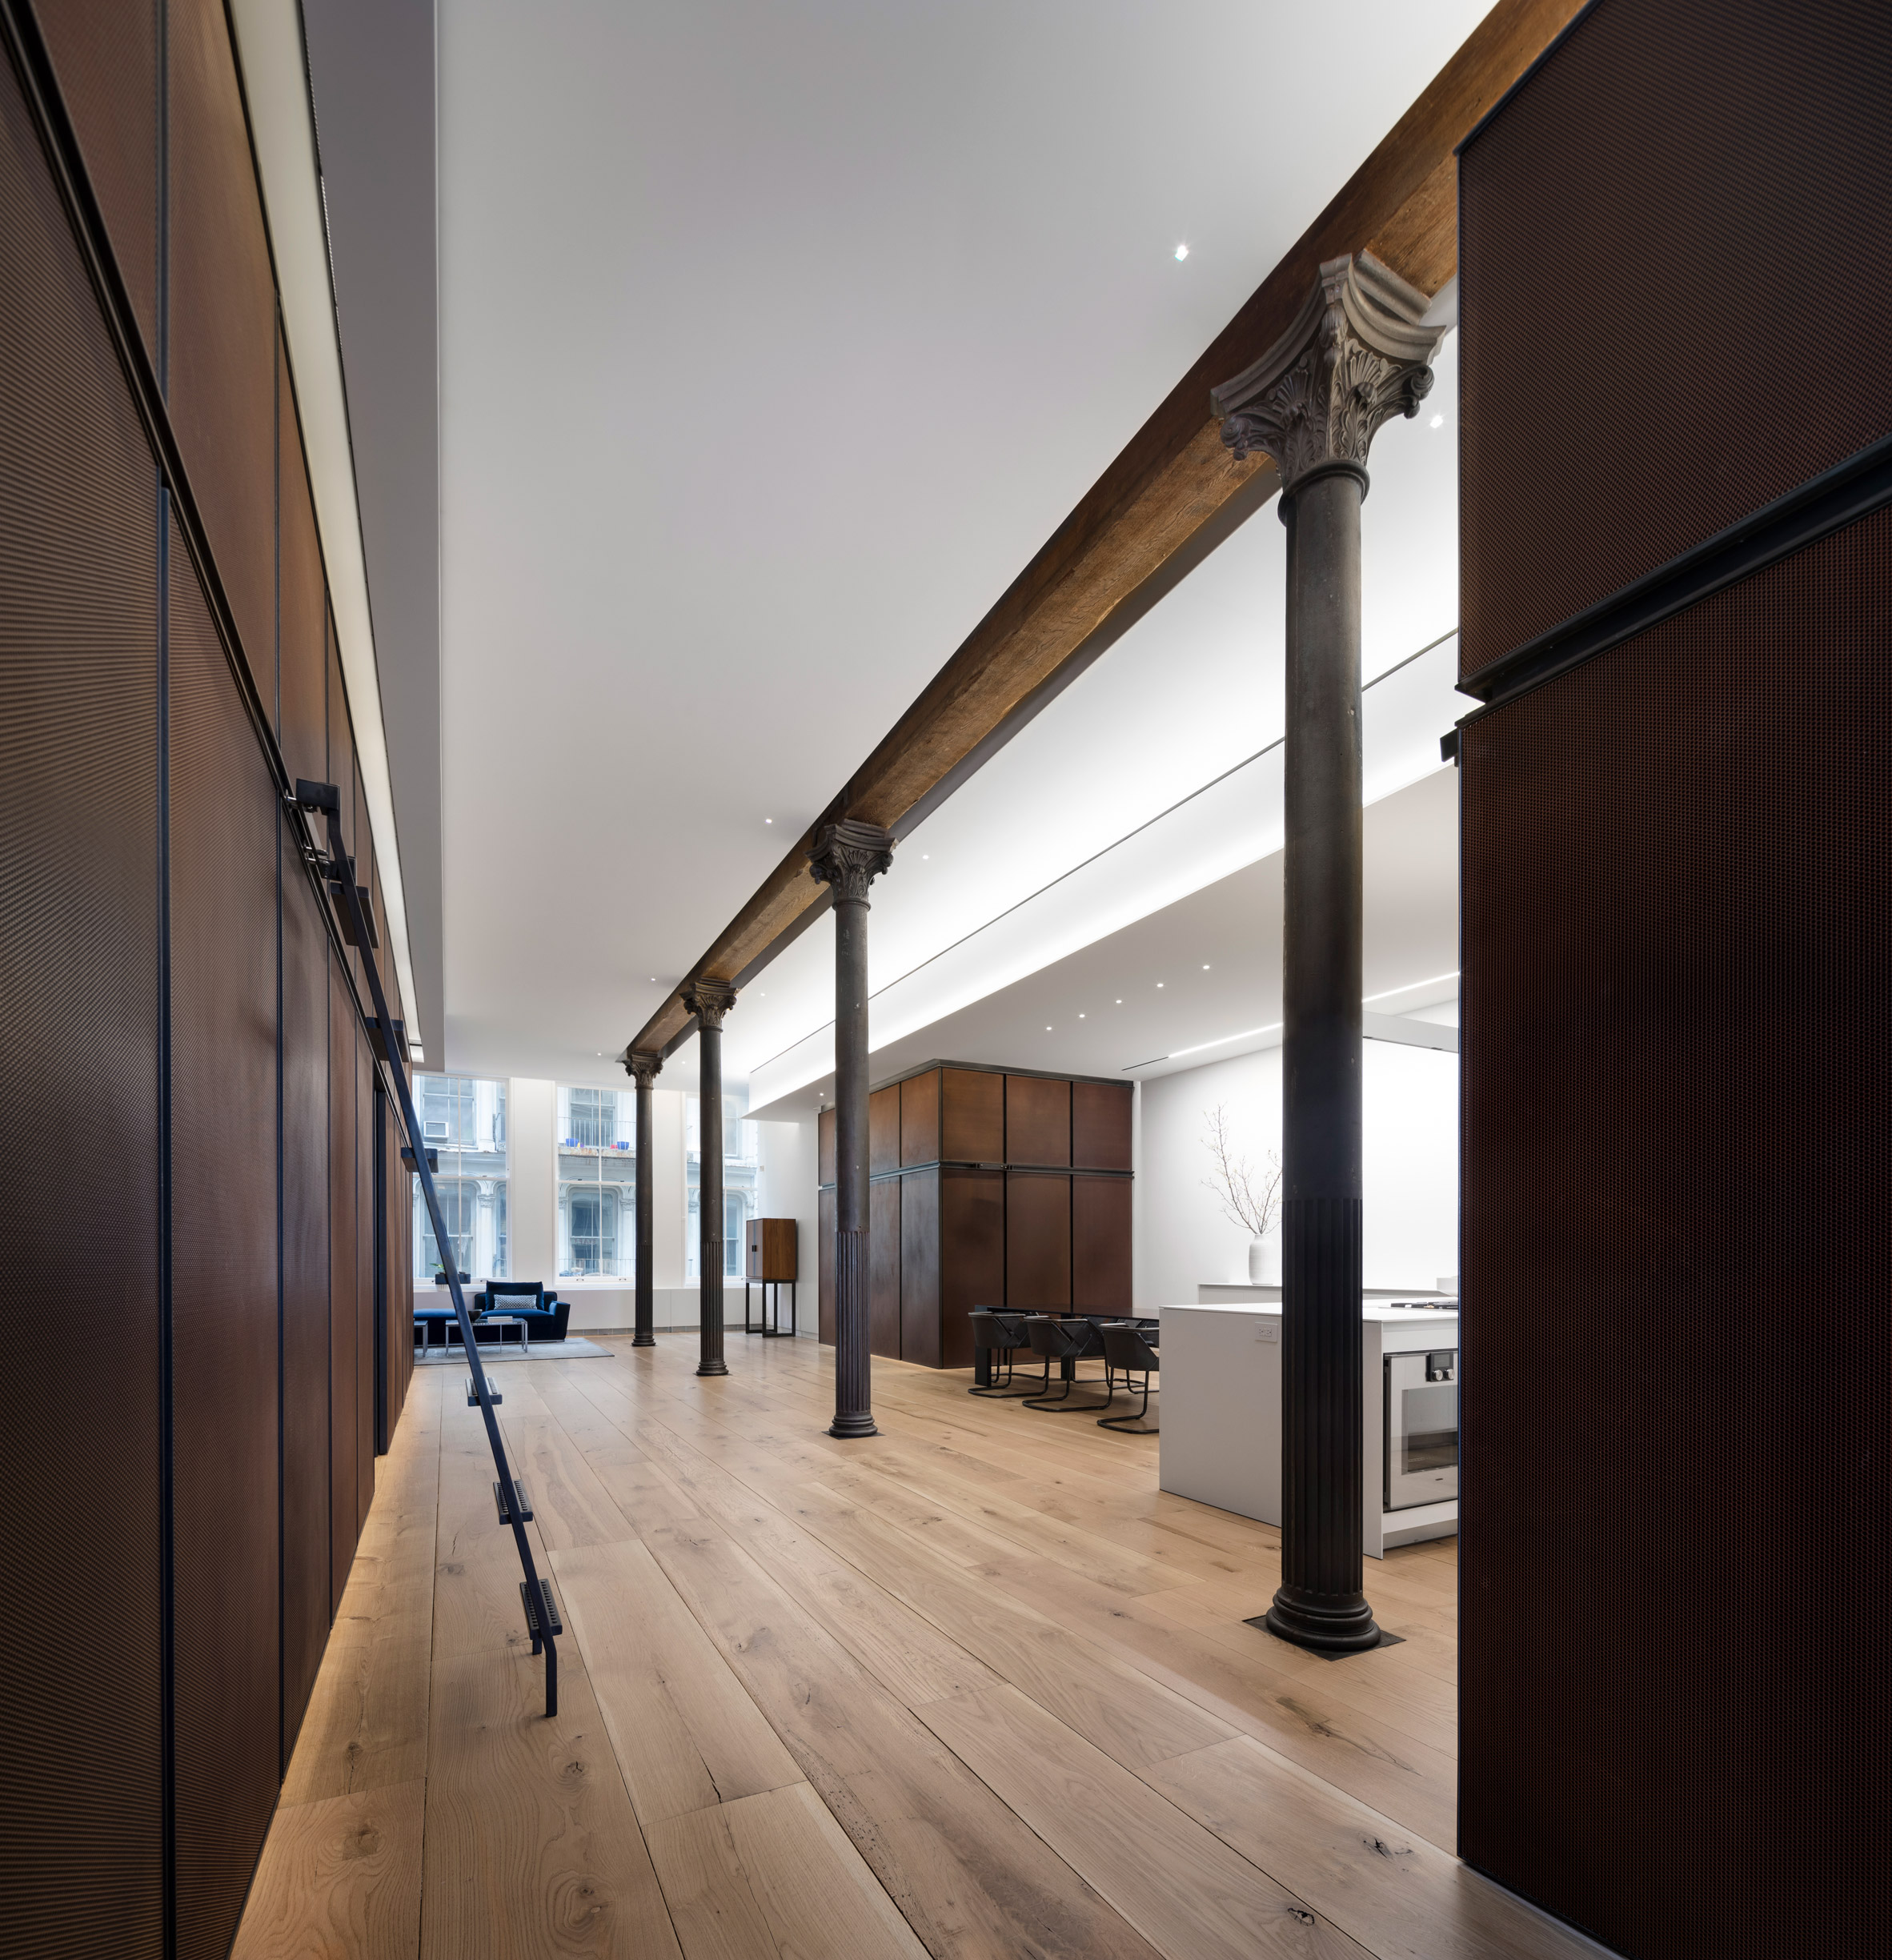 BC—OA hides utilitarian spaces within renovated Soho loft